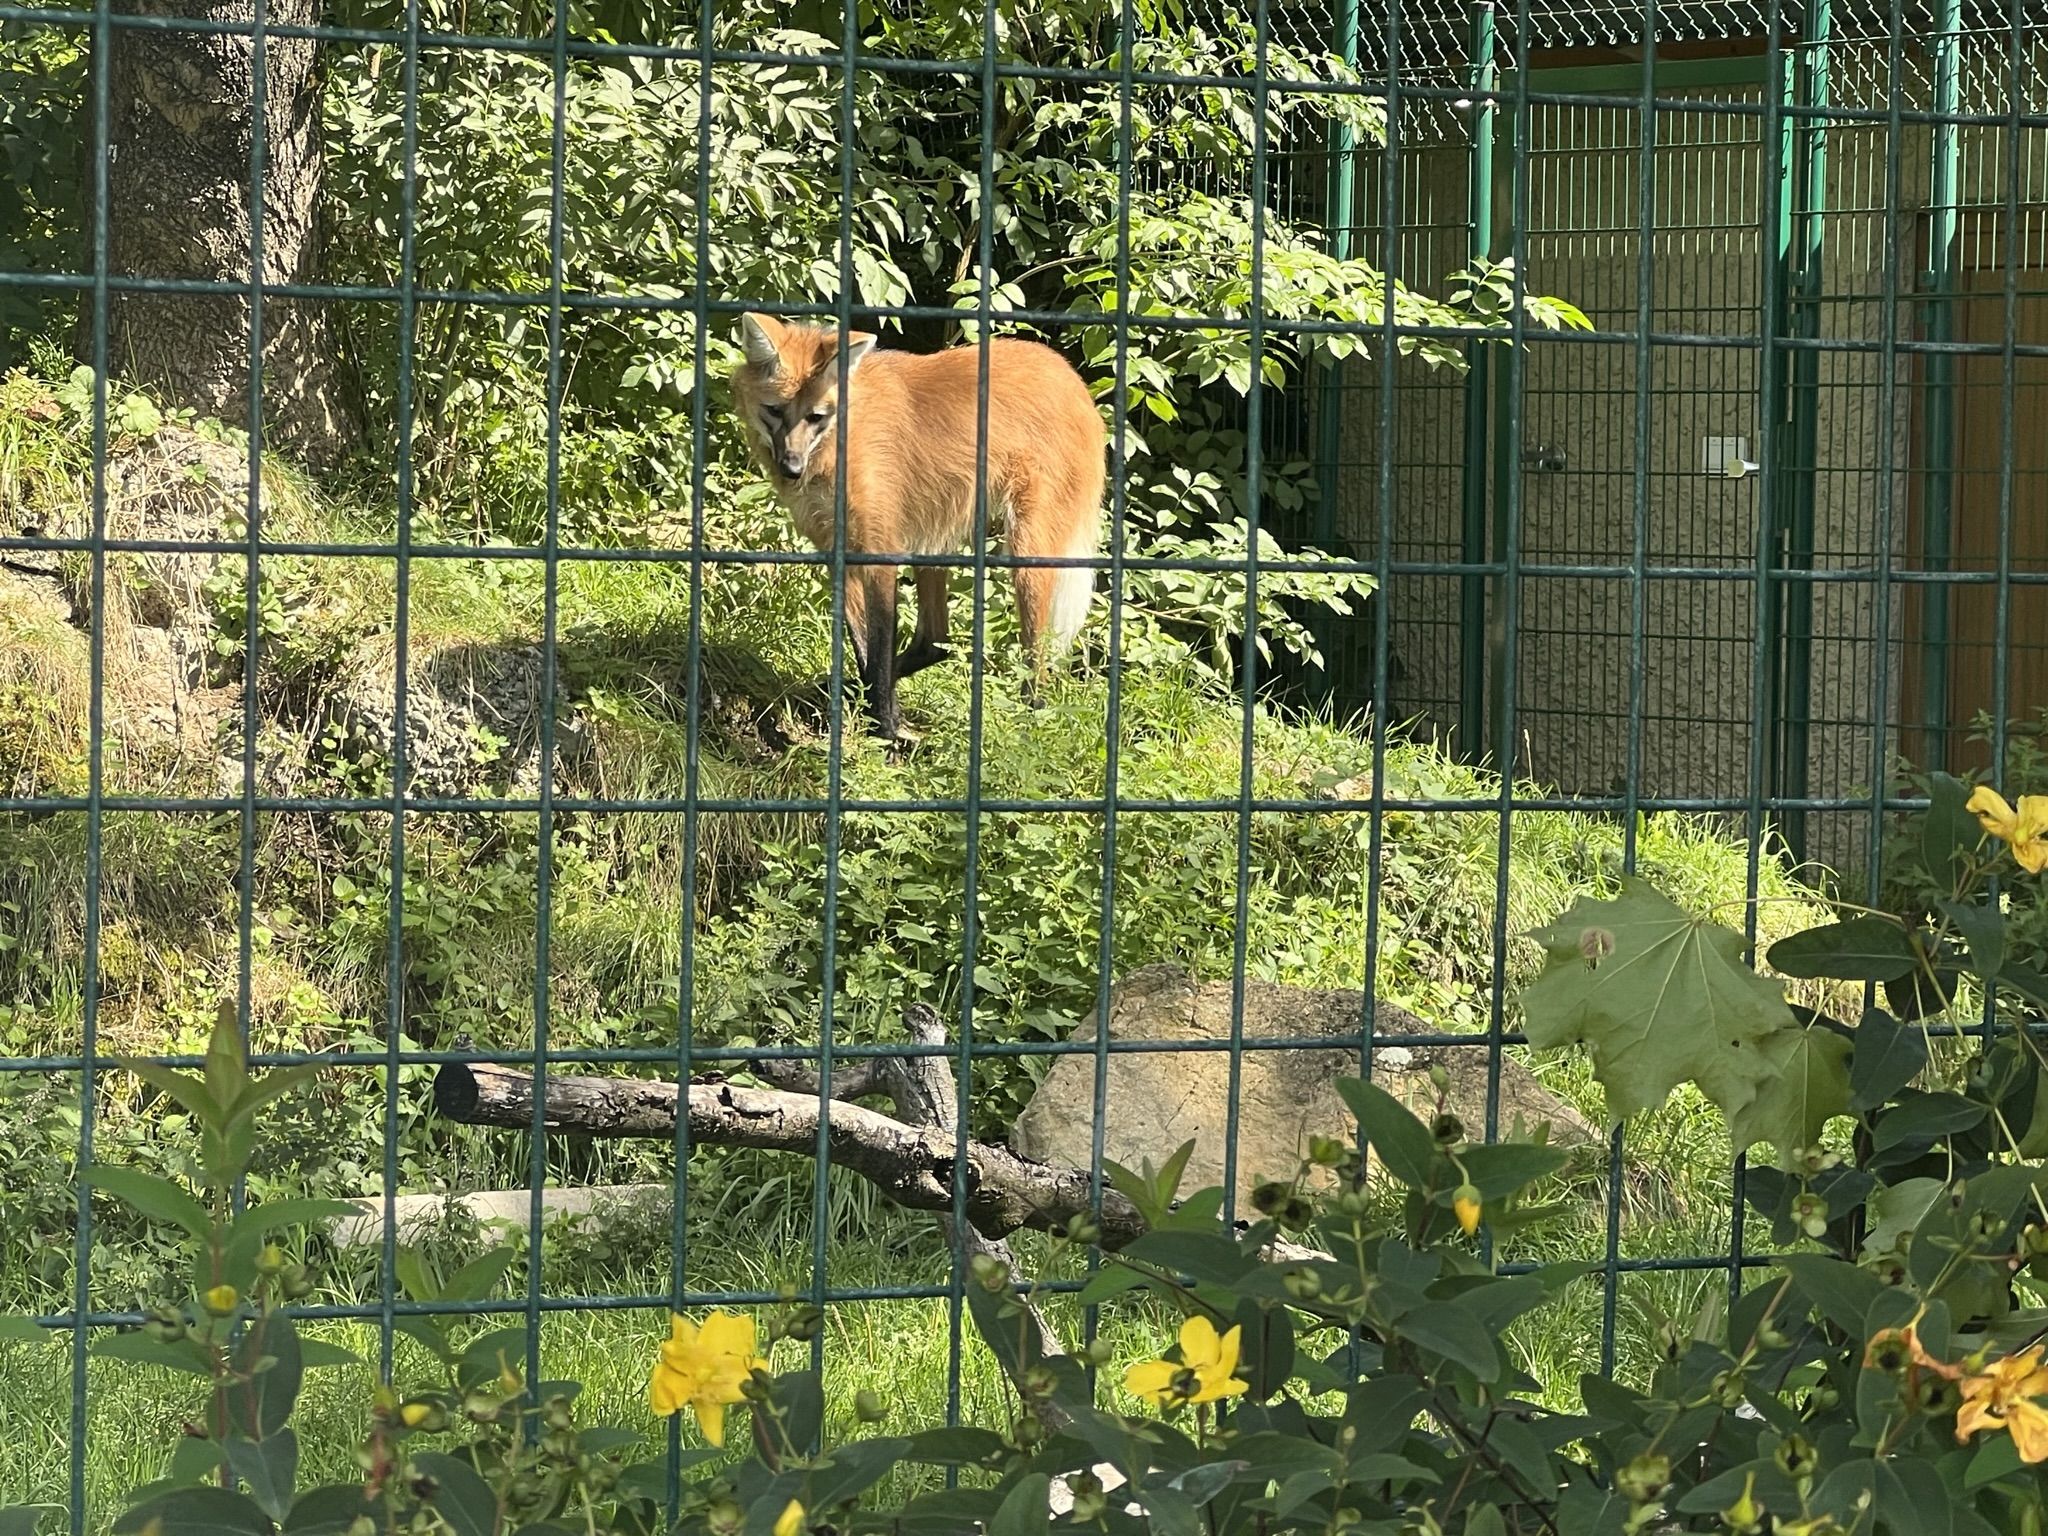 Zoo Salzburg Hellbrunn